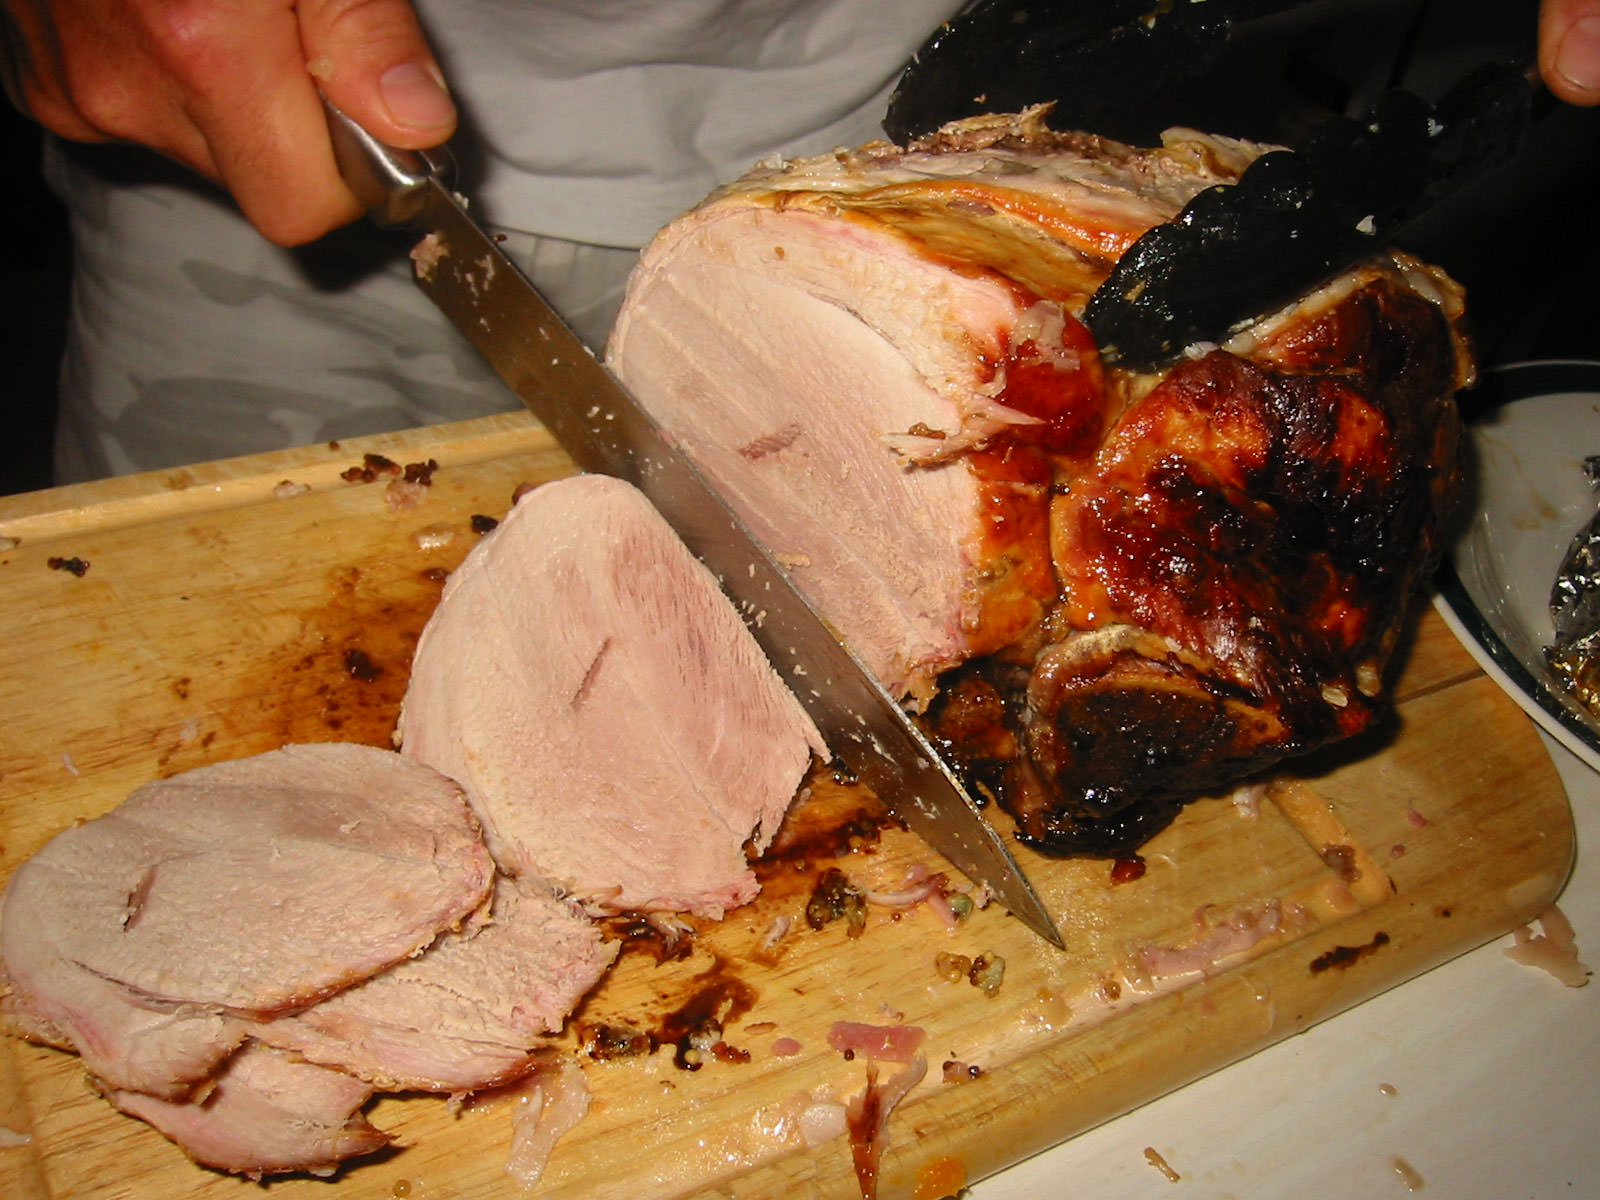 Carving the roast pork